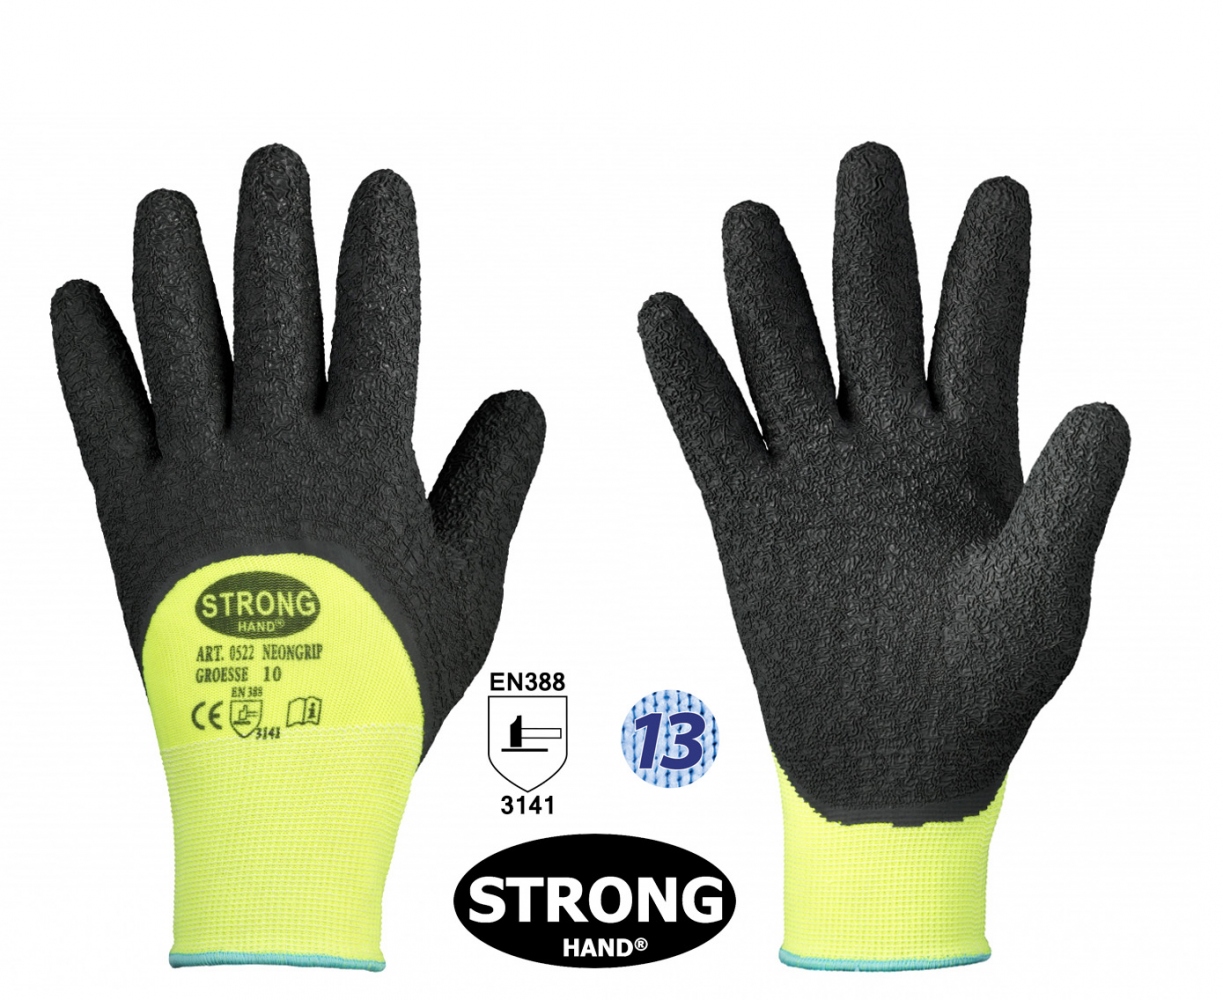 pics/Feldtmann 2016/Handschutz/stronghand-0522-neongrip-protective-gloves.jpg